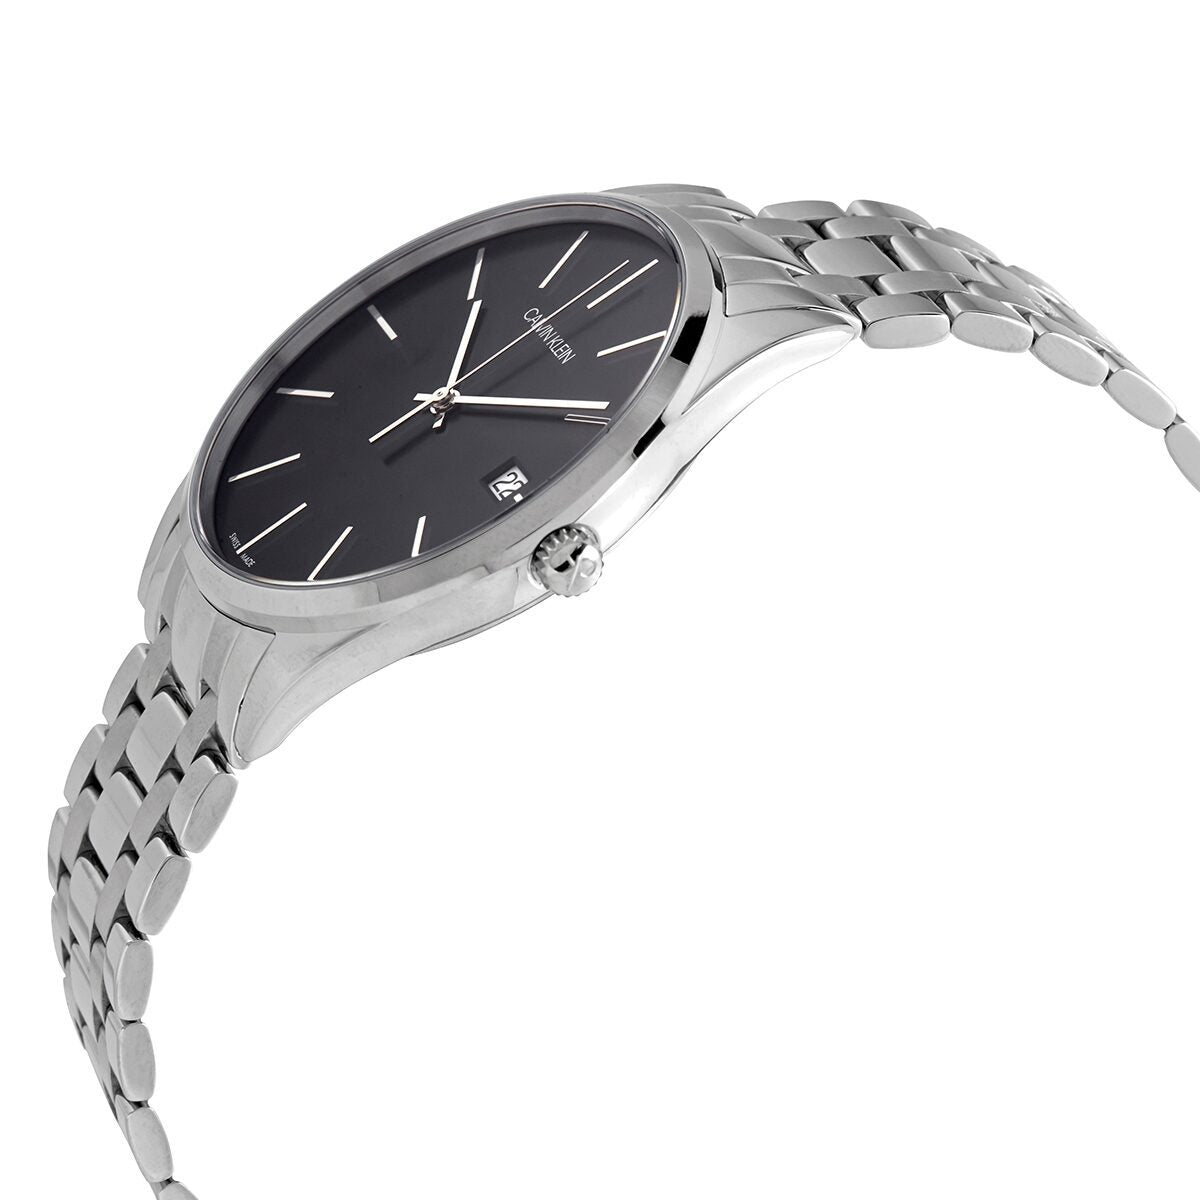 NEW Calvin Klein Time Steel Mens Watches - Black Dial K4N21141 全新 Calvin Klein Time 鋼製男士手錶 - 黑色錶盤 K4N21141